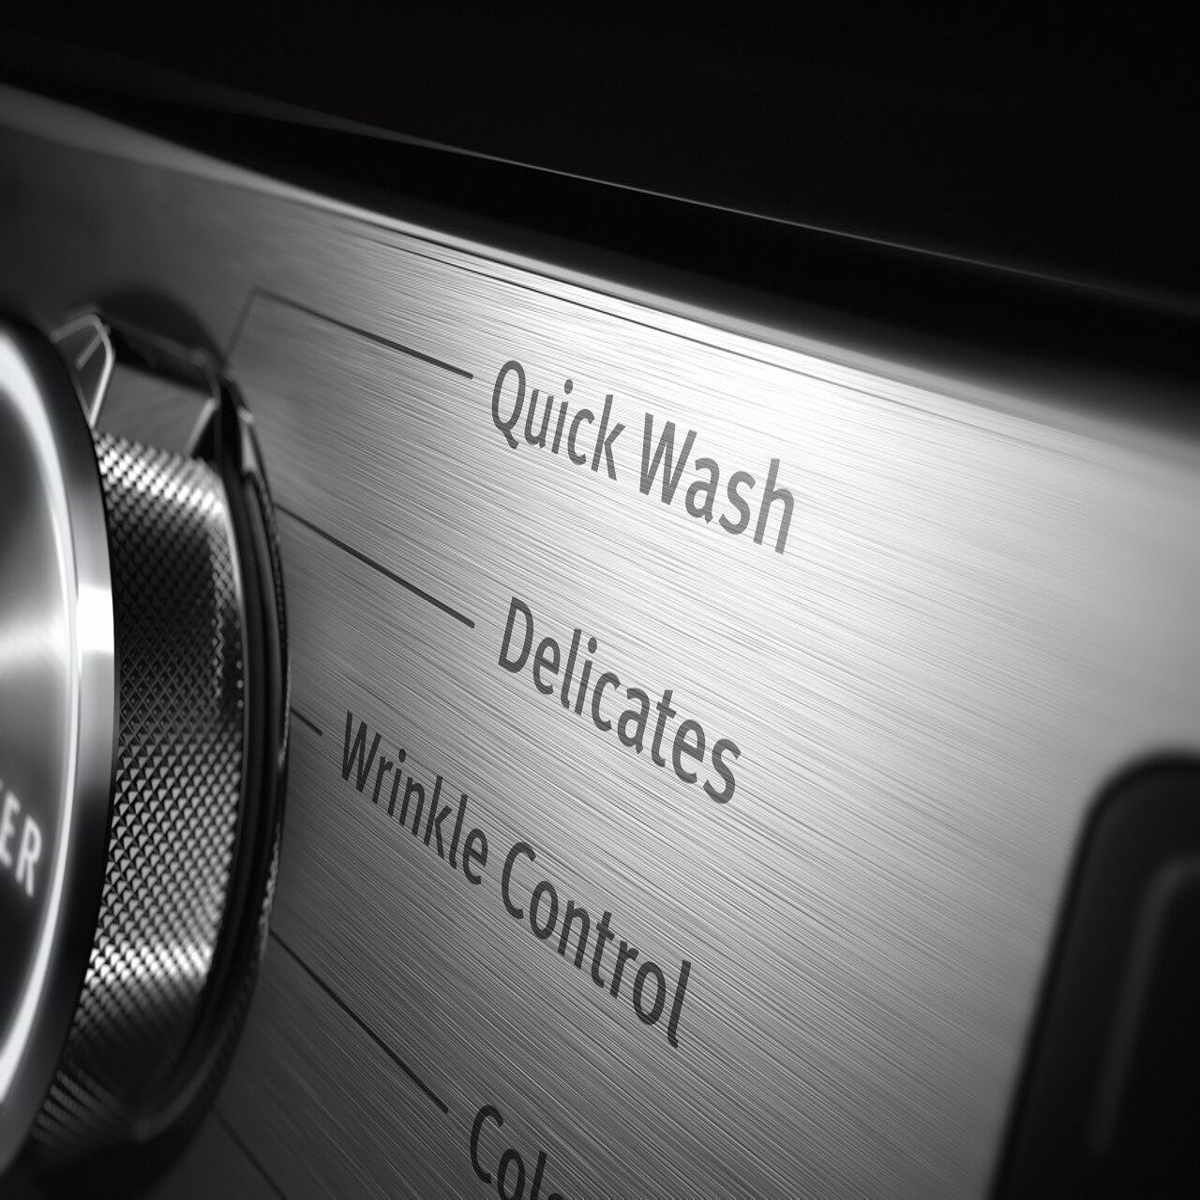 Maytag dryer settings explained